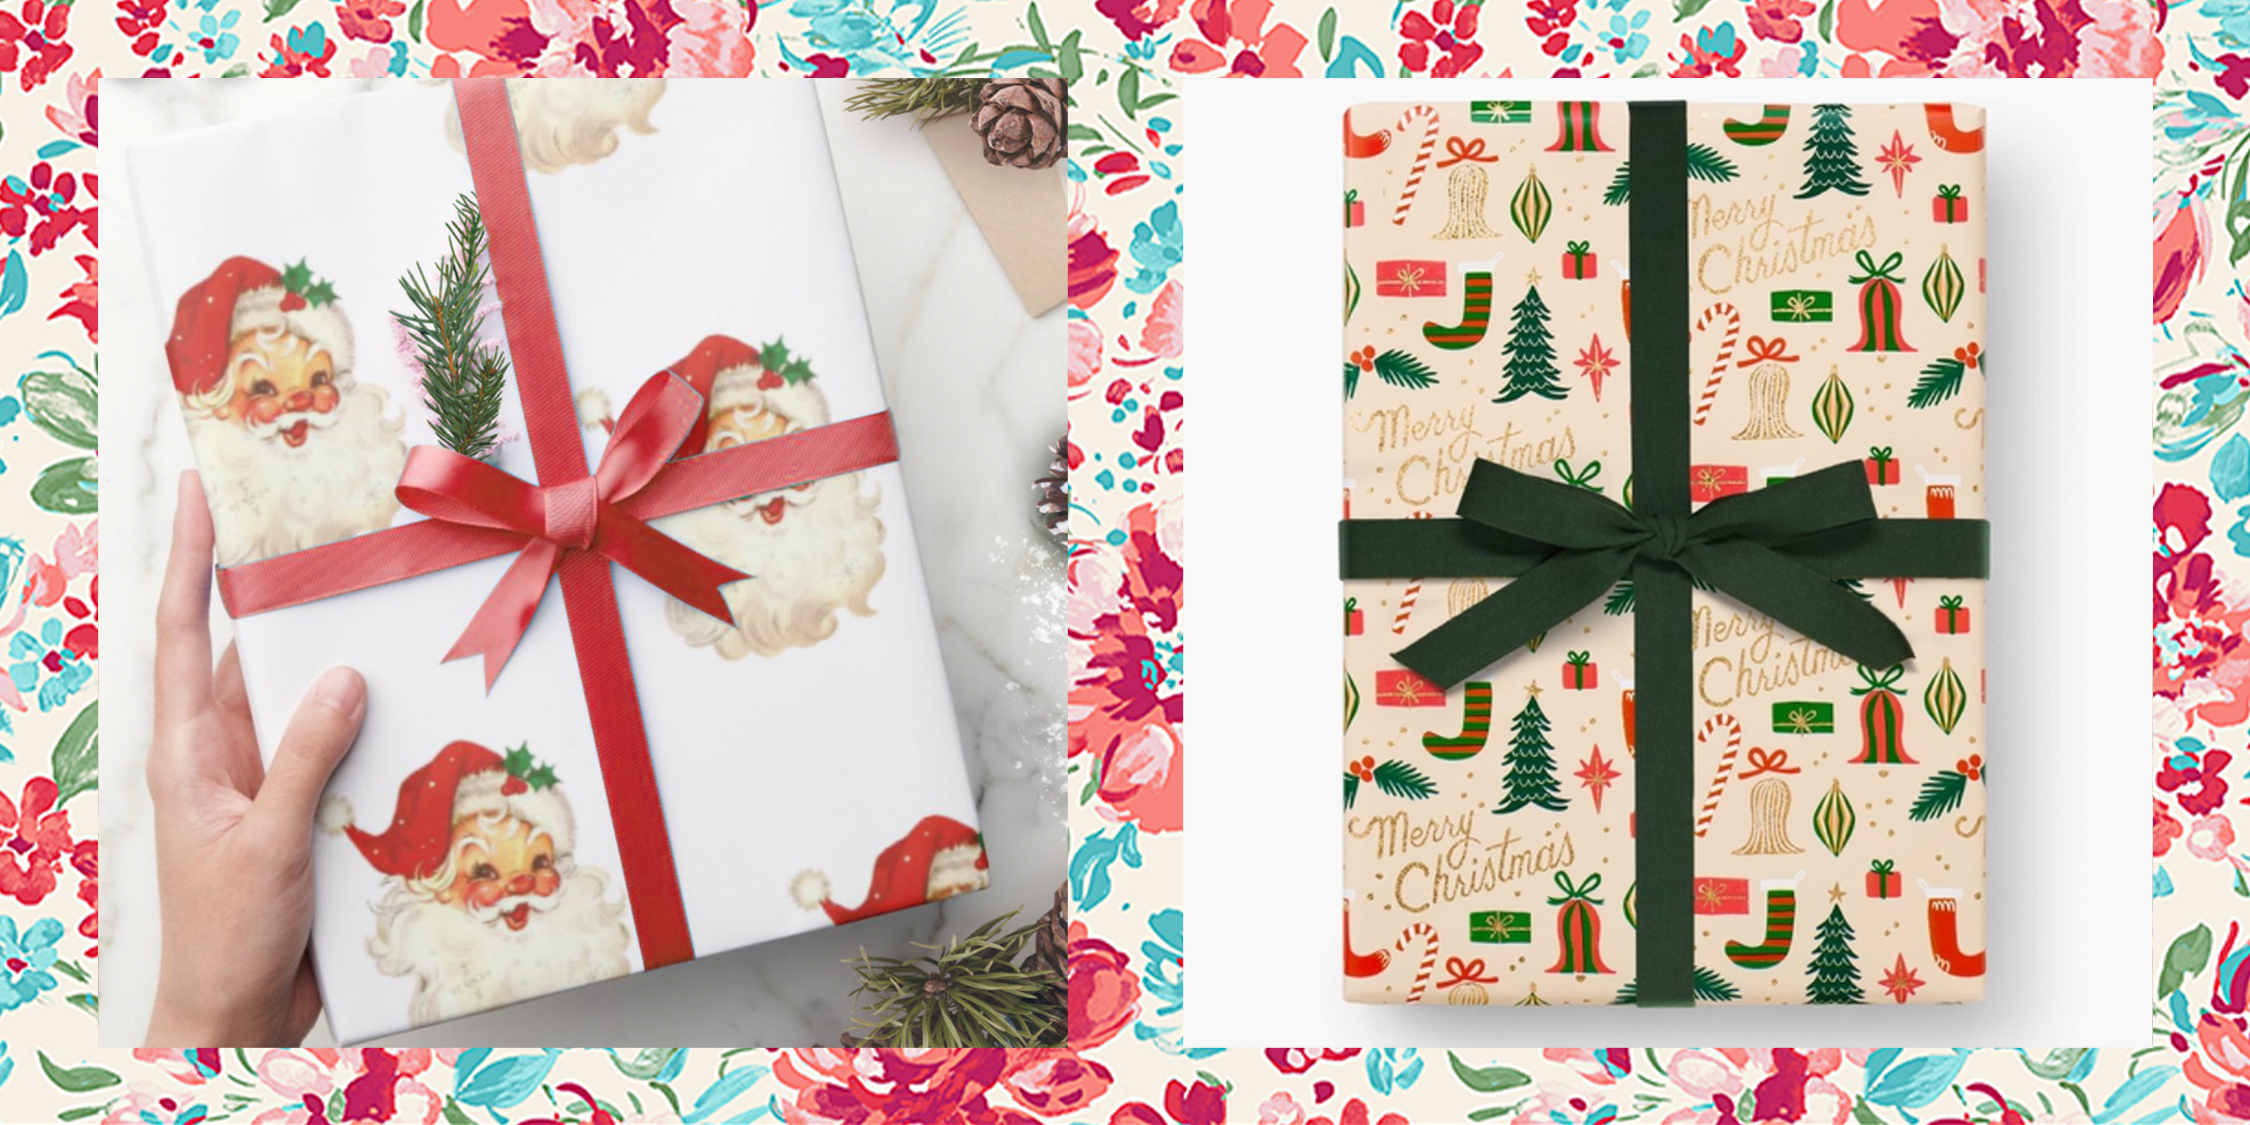 3 creative ways to reuse gift wrap scraps | Hallmark Ideas & Inspiration